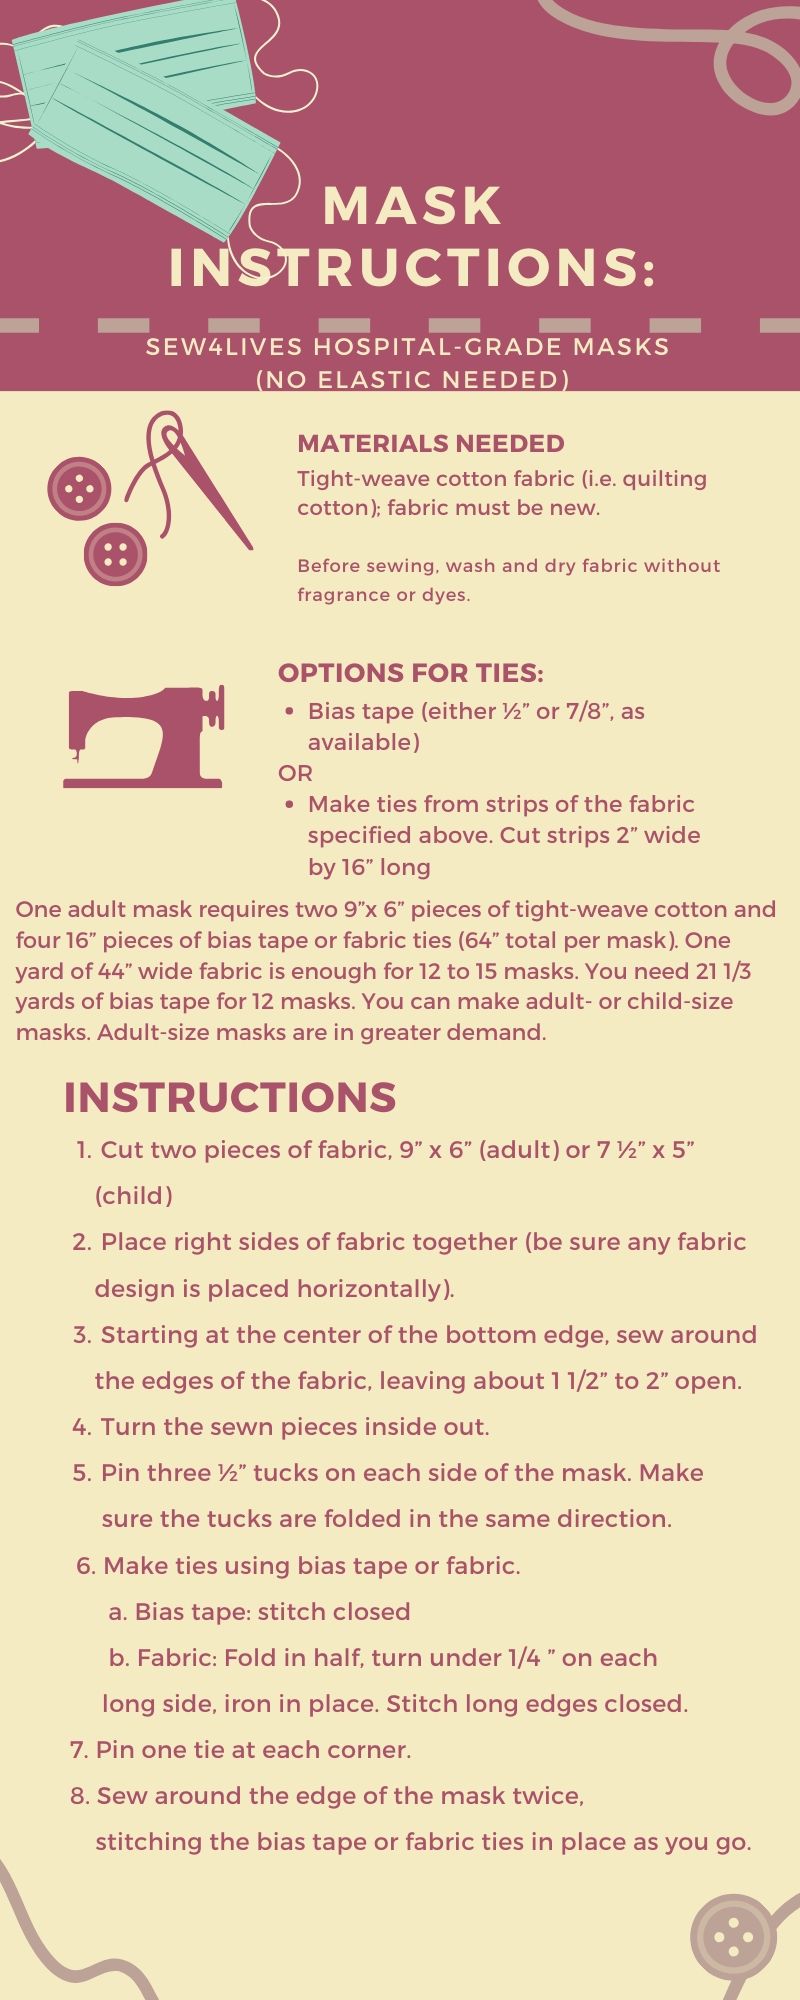 Mask Instructions